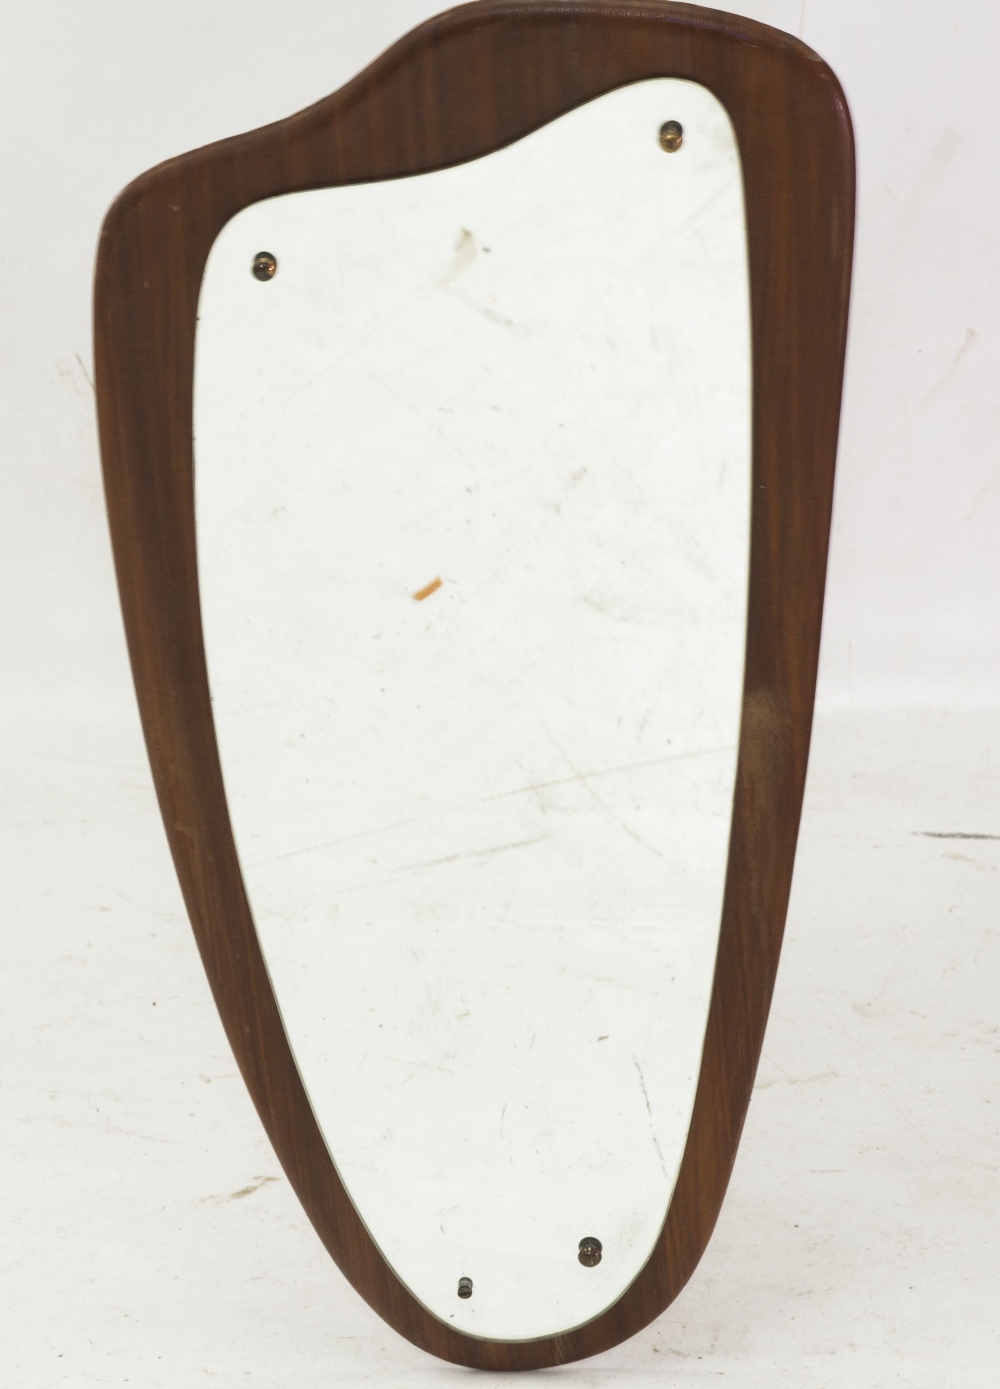 A modernist asymmetric mirror